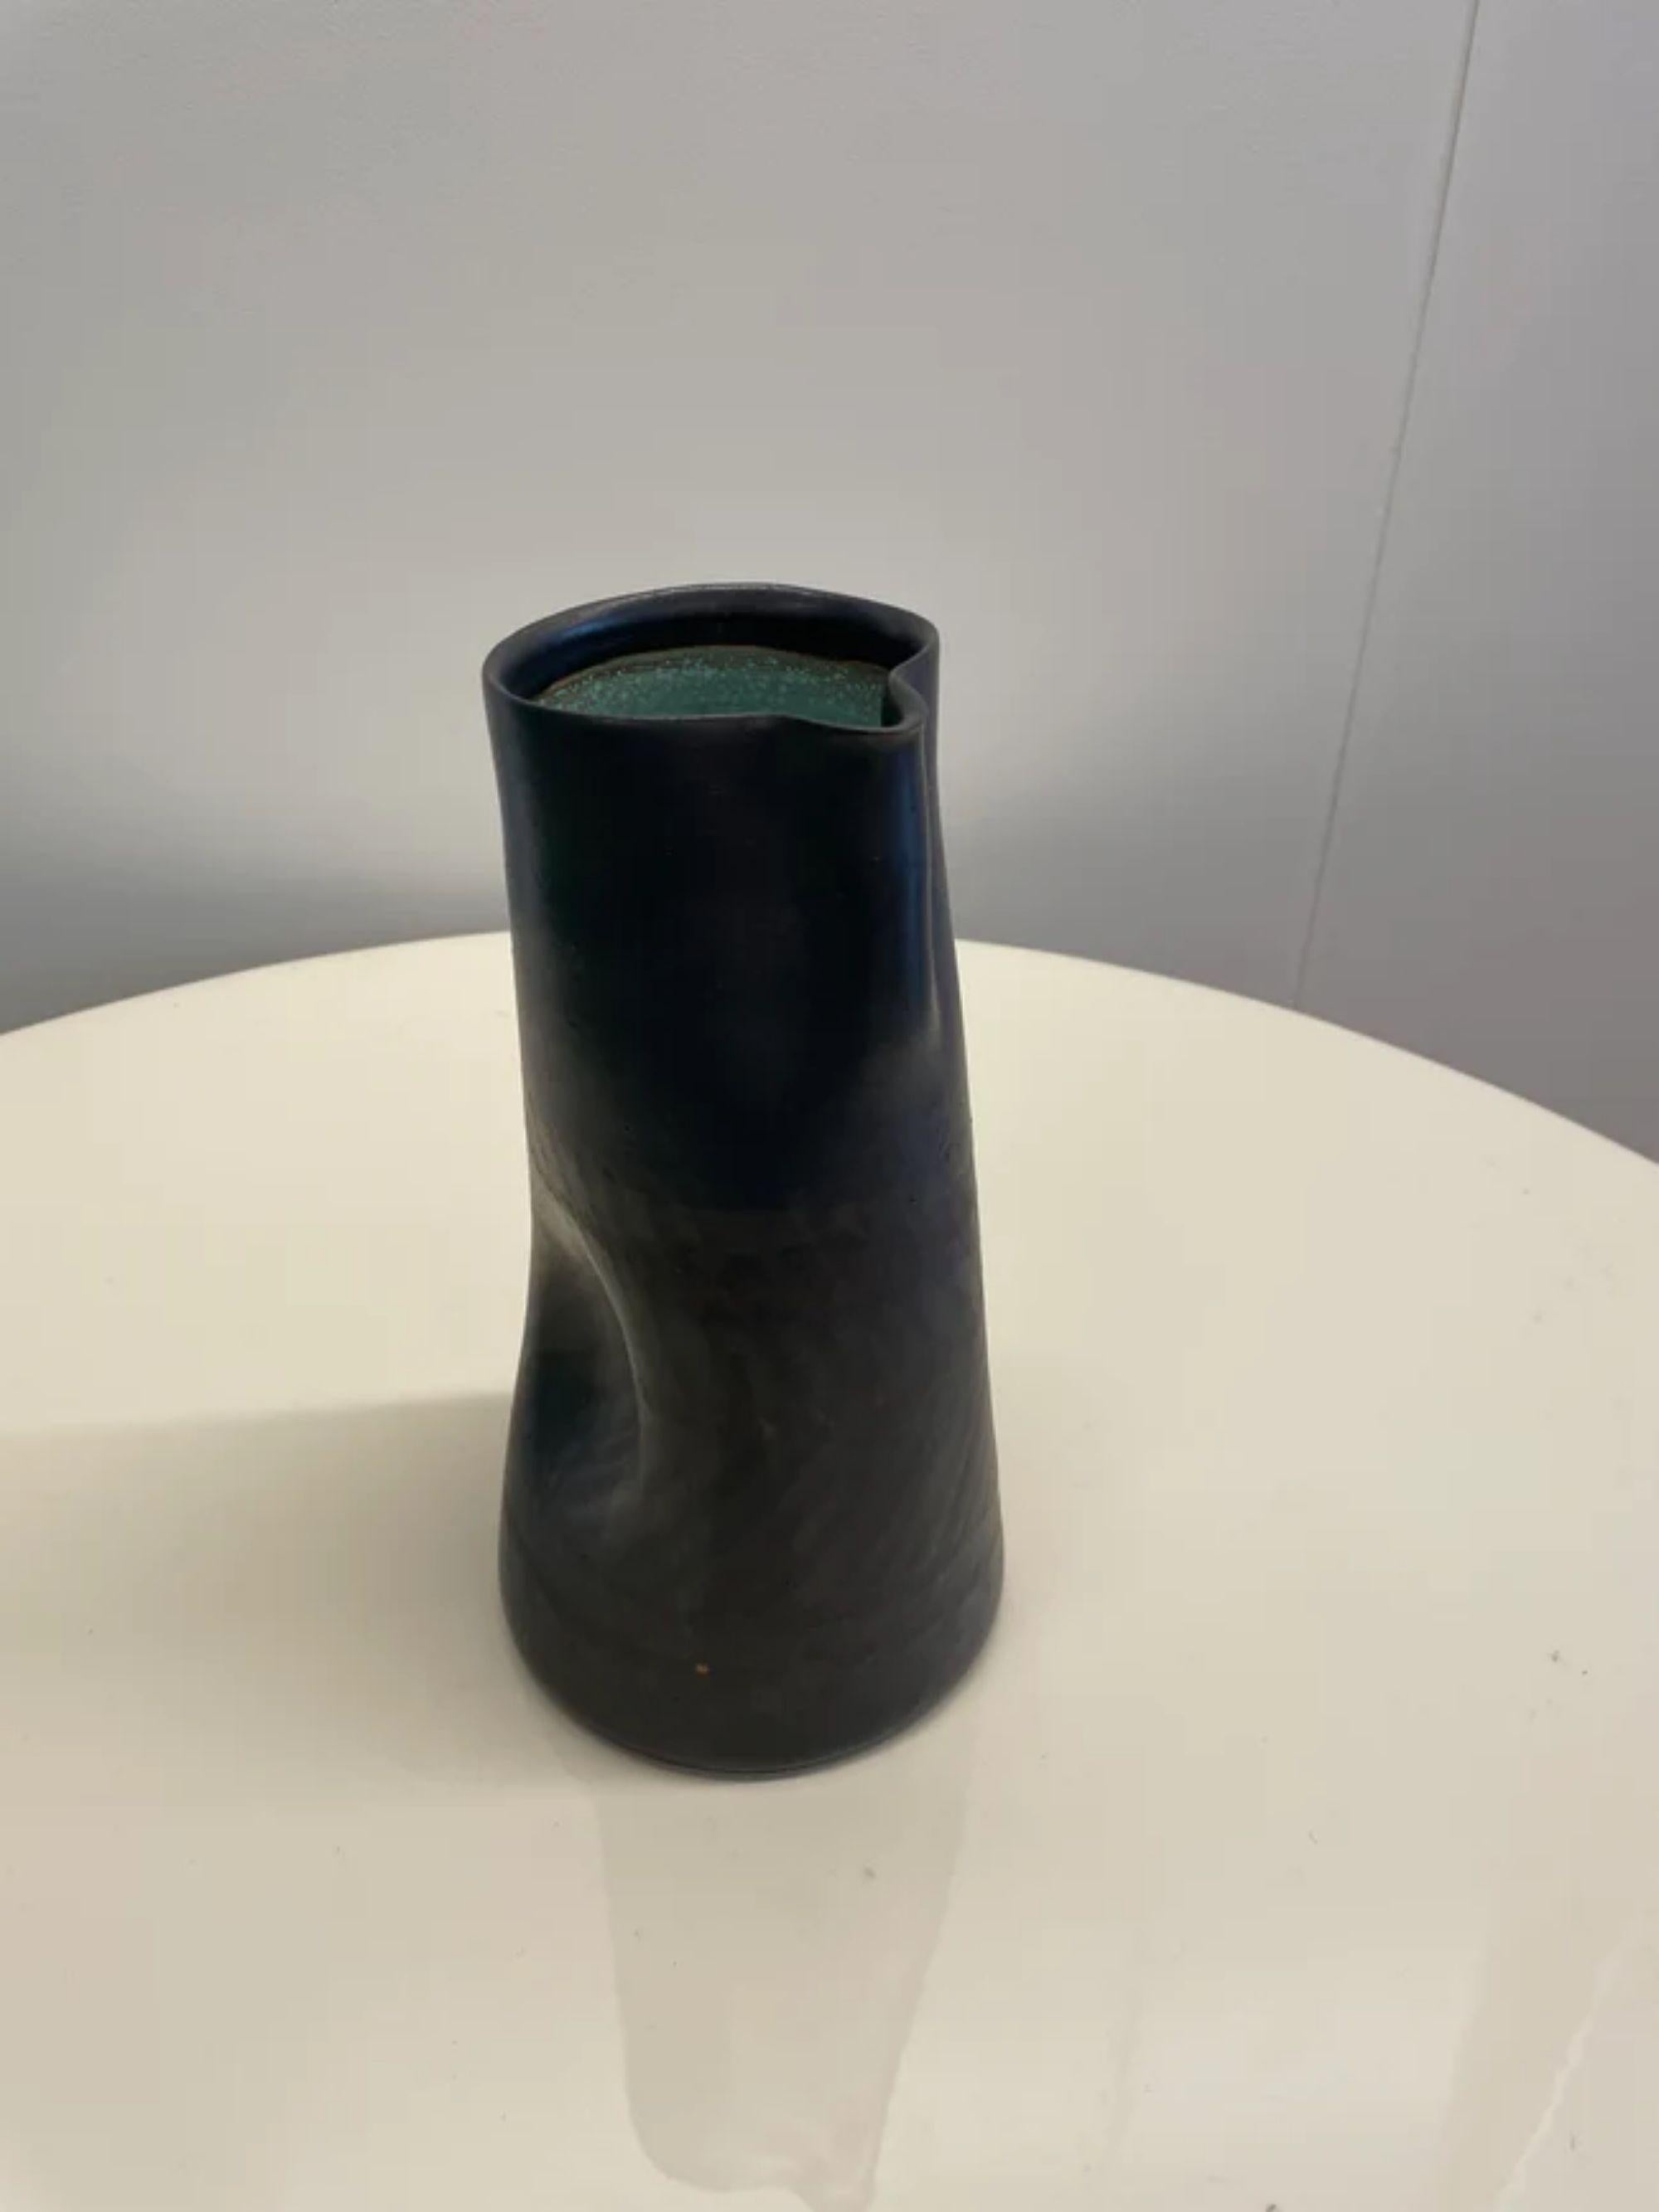 Alessio Tasca ceramic vase, Italy, 1970s

Additional Information:
Materials: Glazed ceramic
Dimensions: 10” H x 5 1/2” Dia.